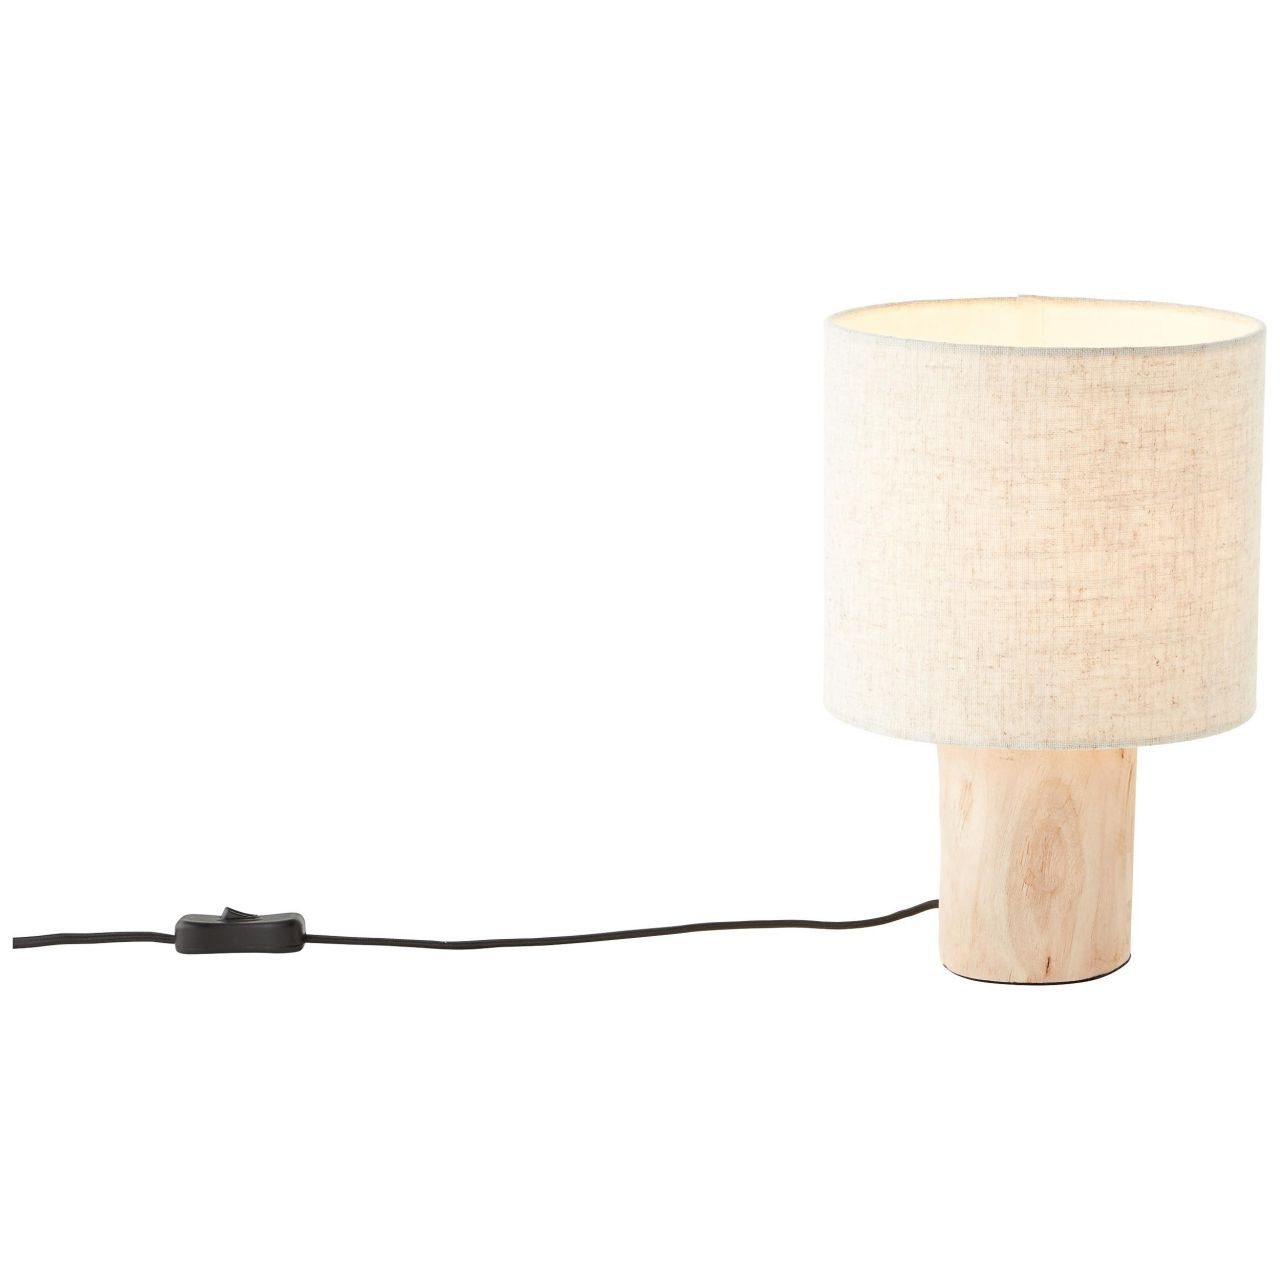 Brilliant Tischleuchte Pia, Lampe, 40W, natur, A60, nachhaltiger Pia E27, 1x Holz Tischleuchte aus